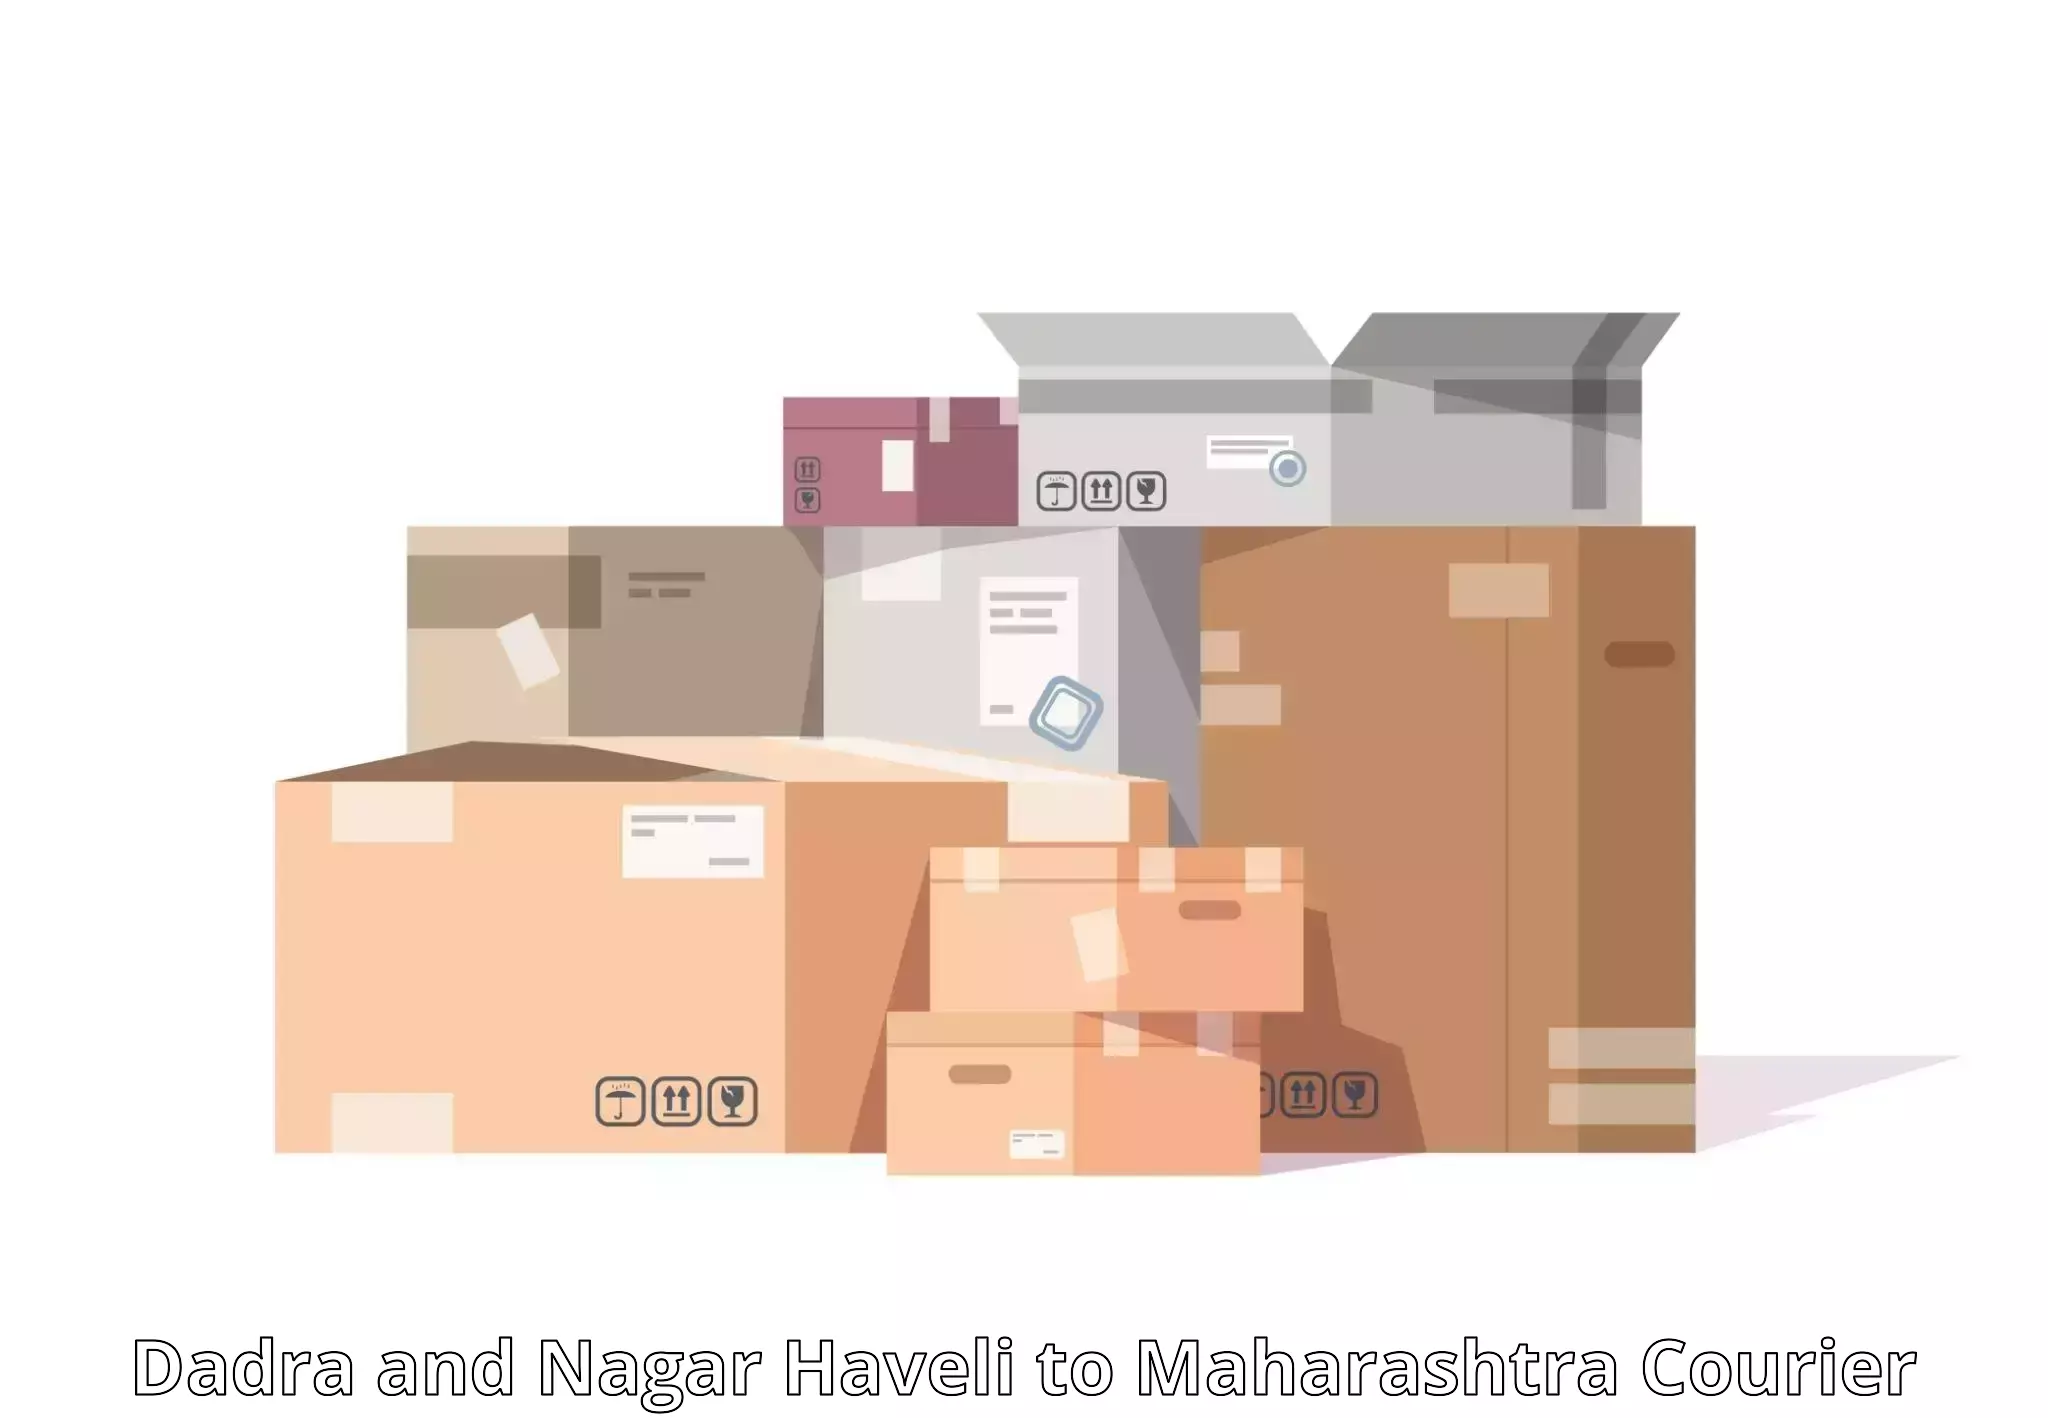 Courier service comparison Dadra and Nagar Haveli to Saoner